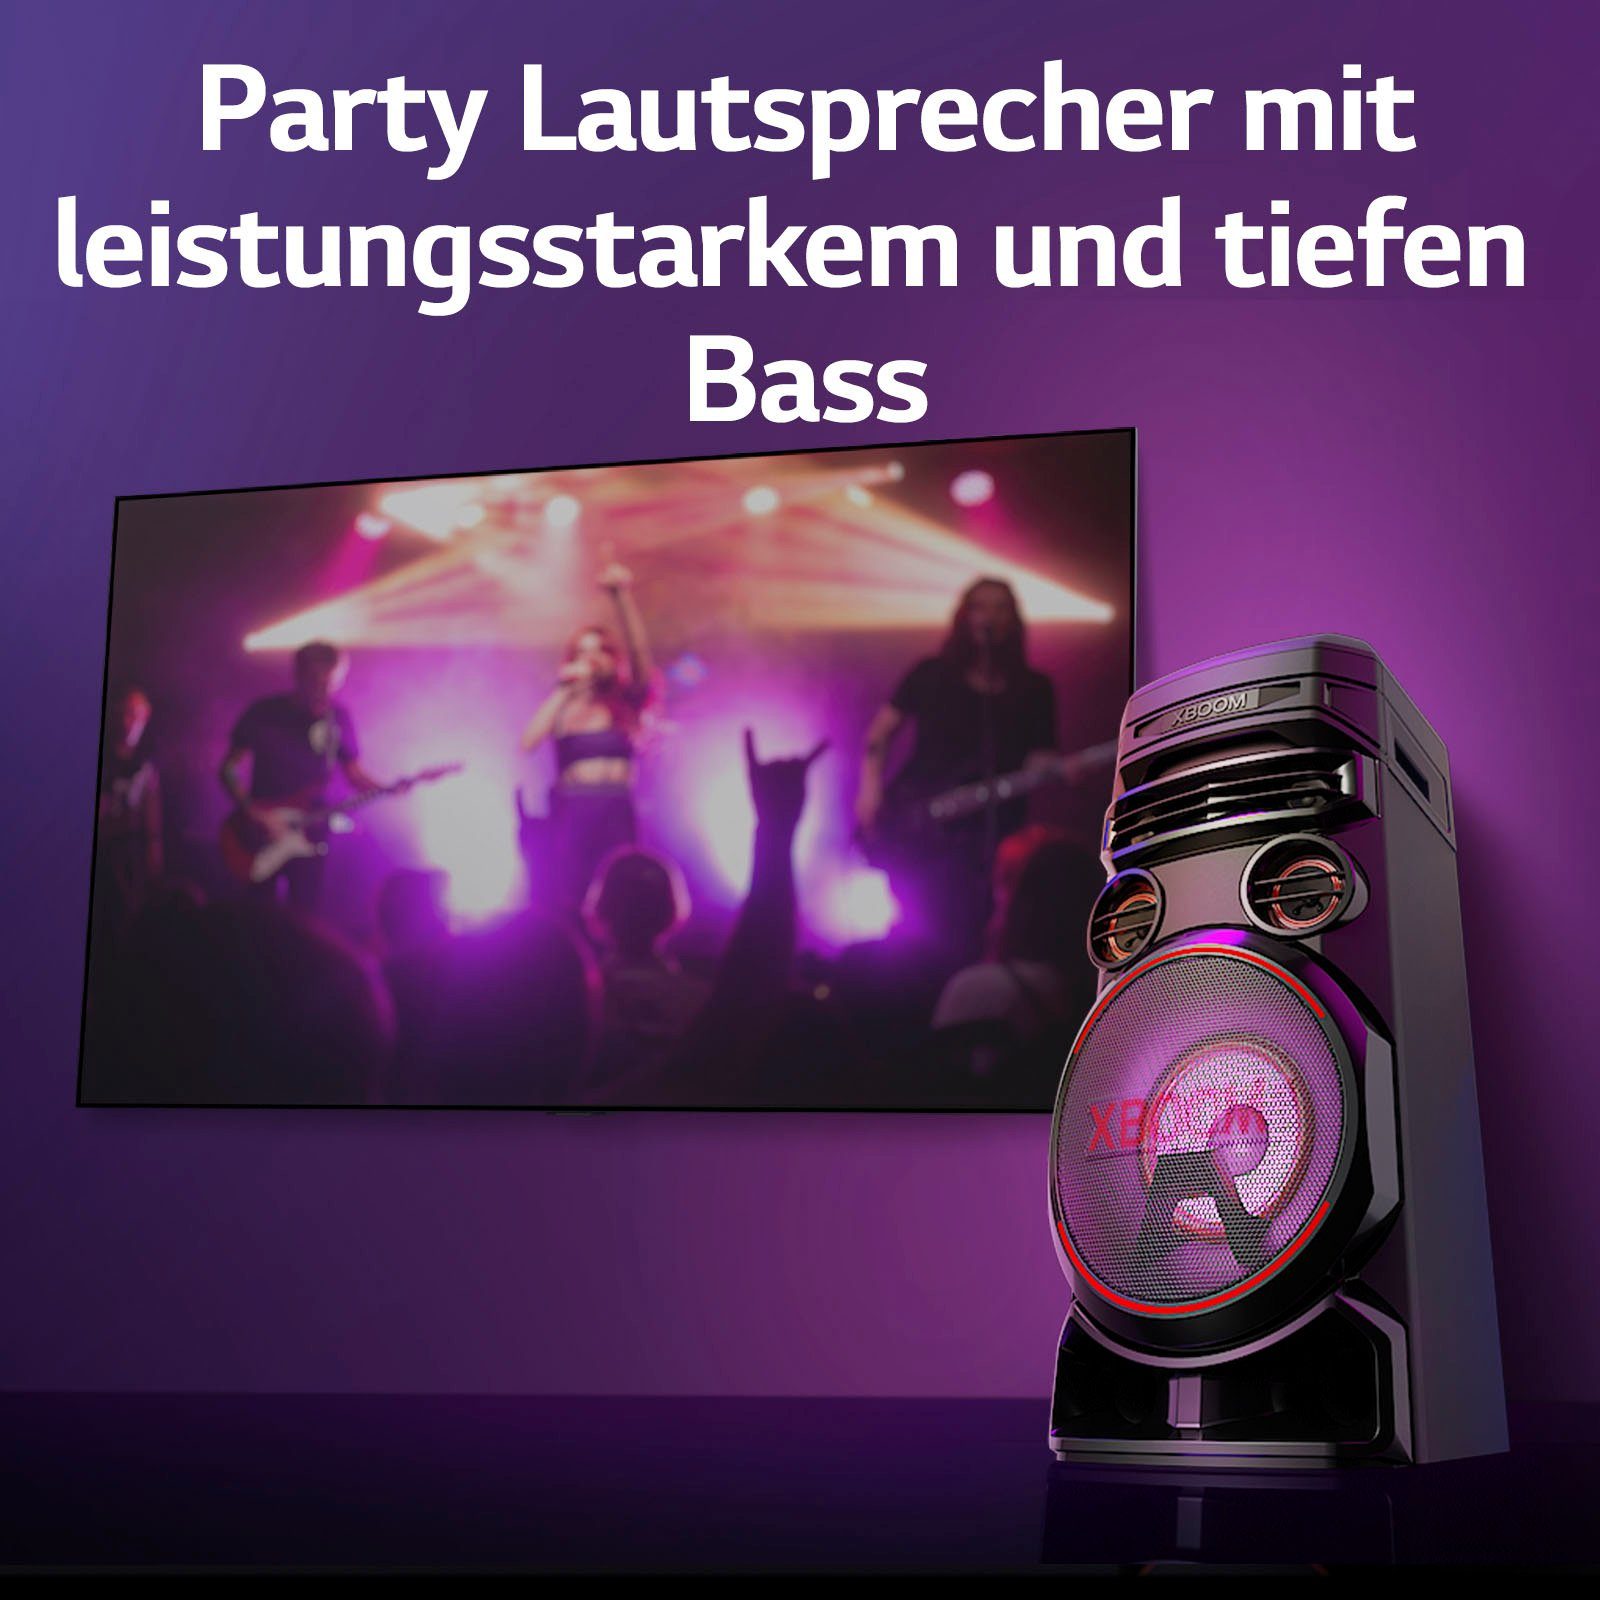 (Bluetooth) XBOOM RNC7 Party-Lautsprecher LG Stereo